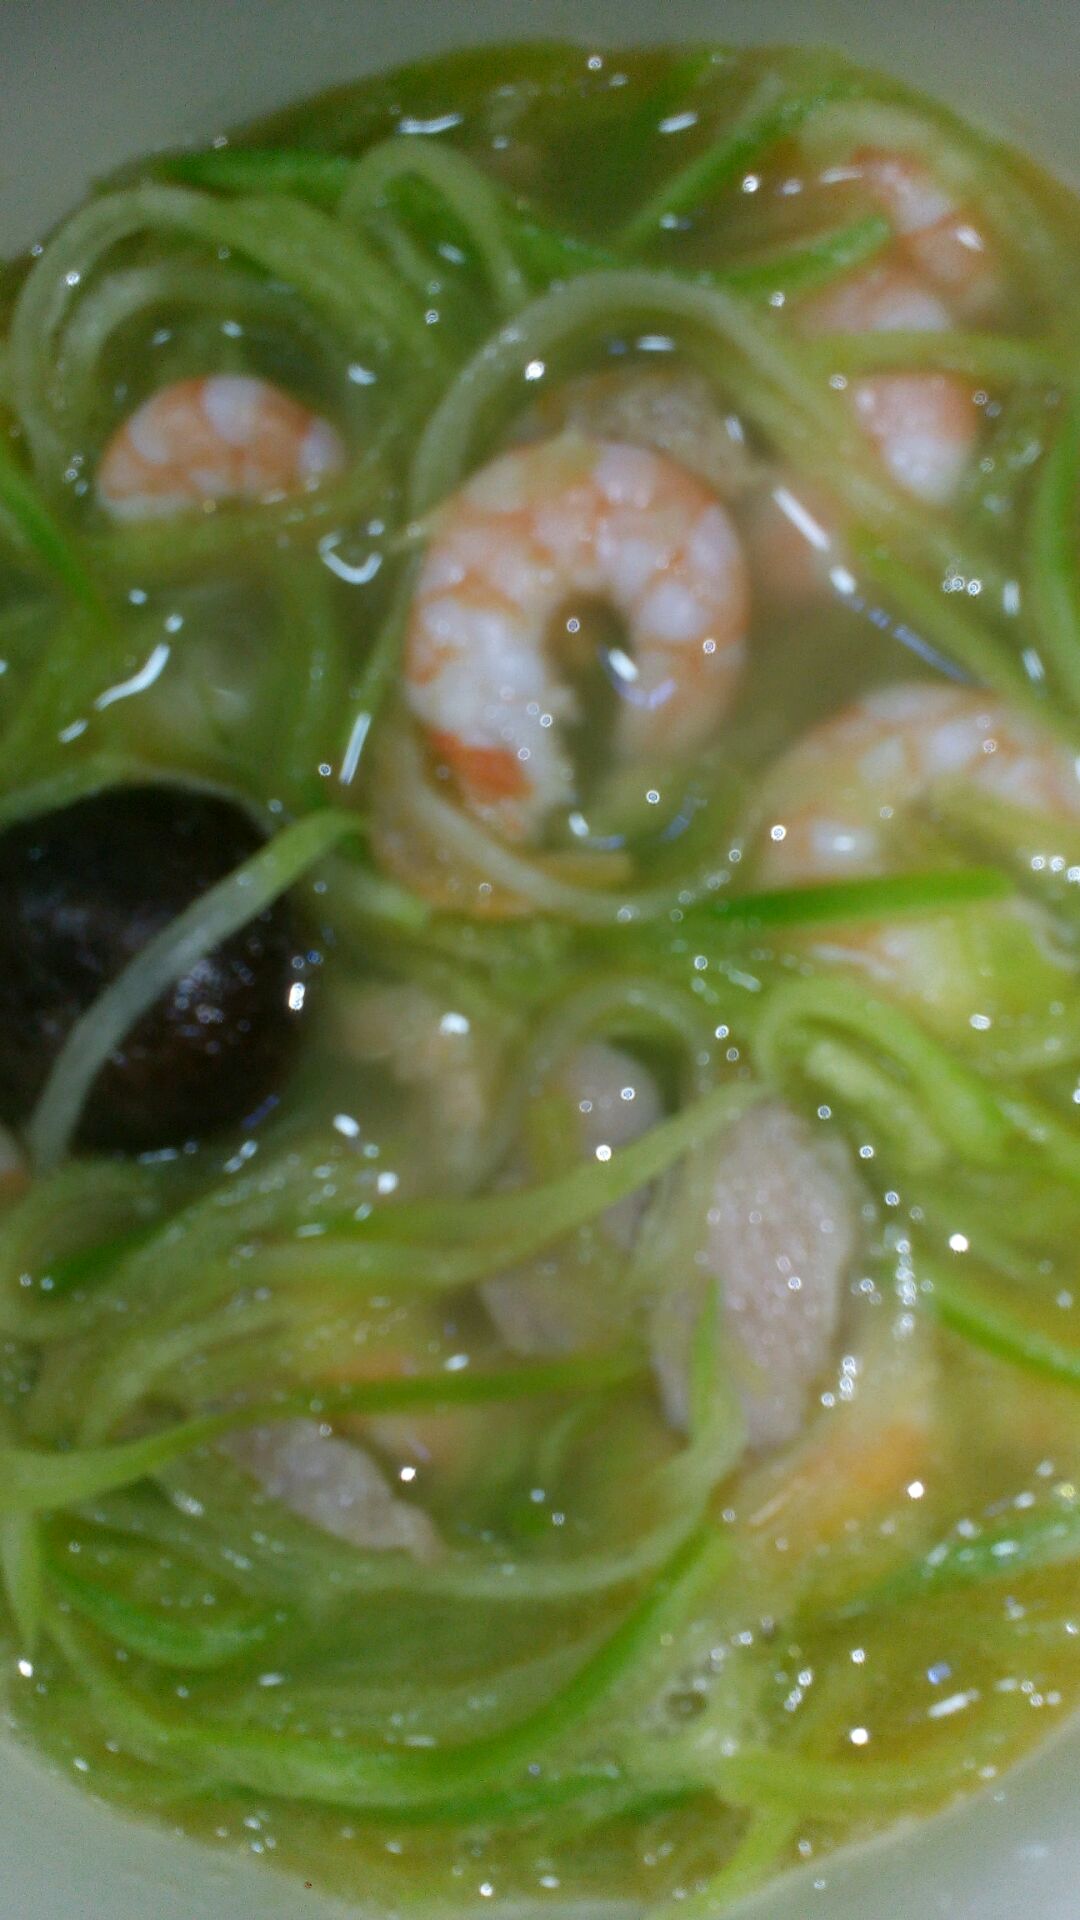 金针菇鲜虾汤,金针菇鲜虾汤的家常做法 - 美食杰金针菇鲜虾汤做法大全